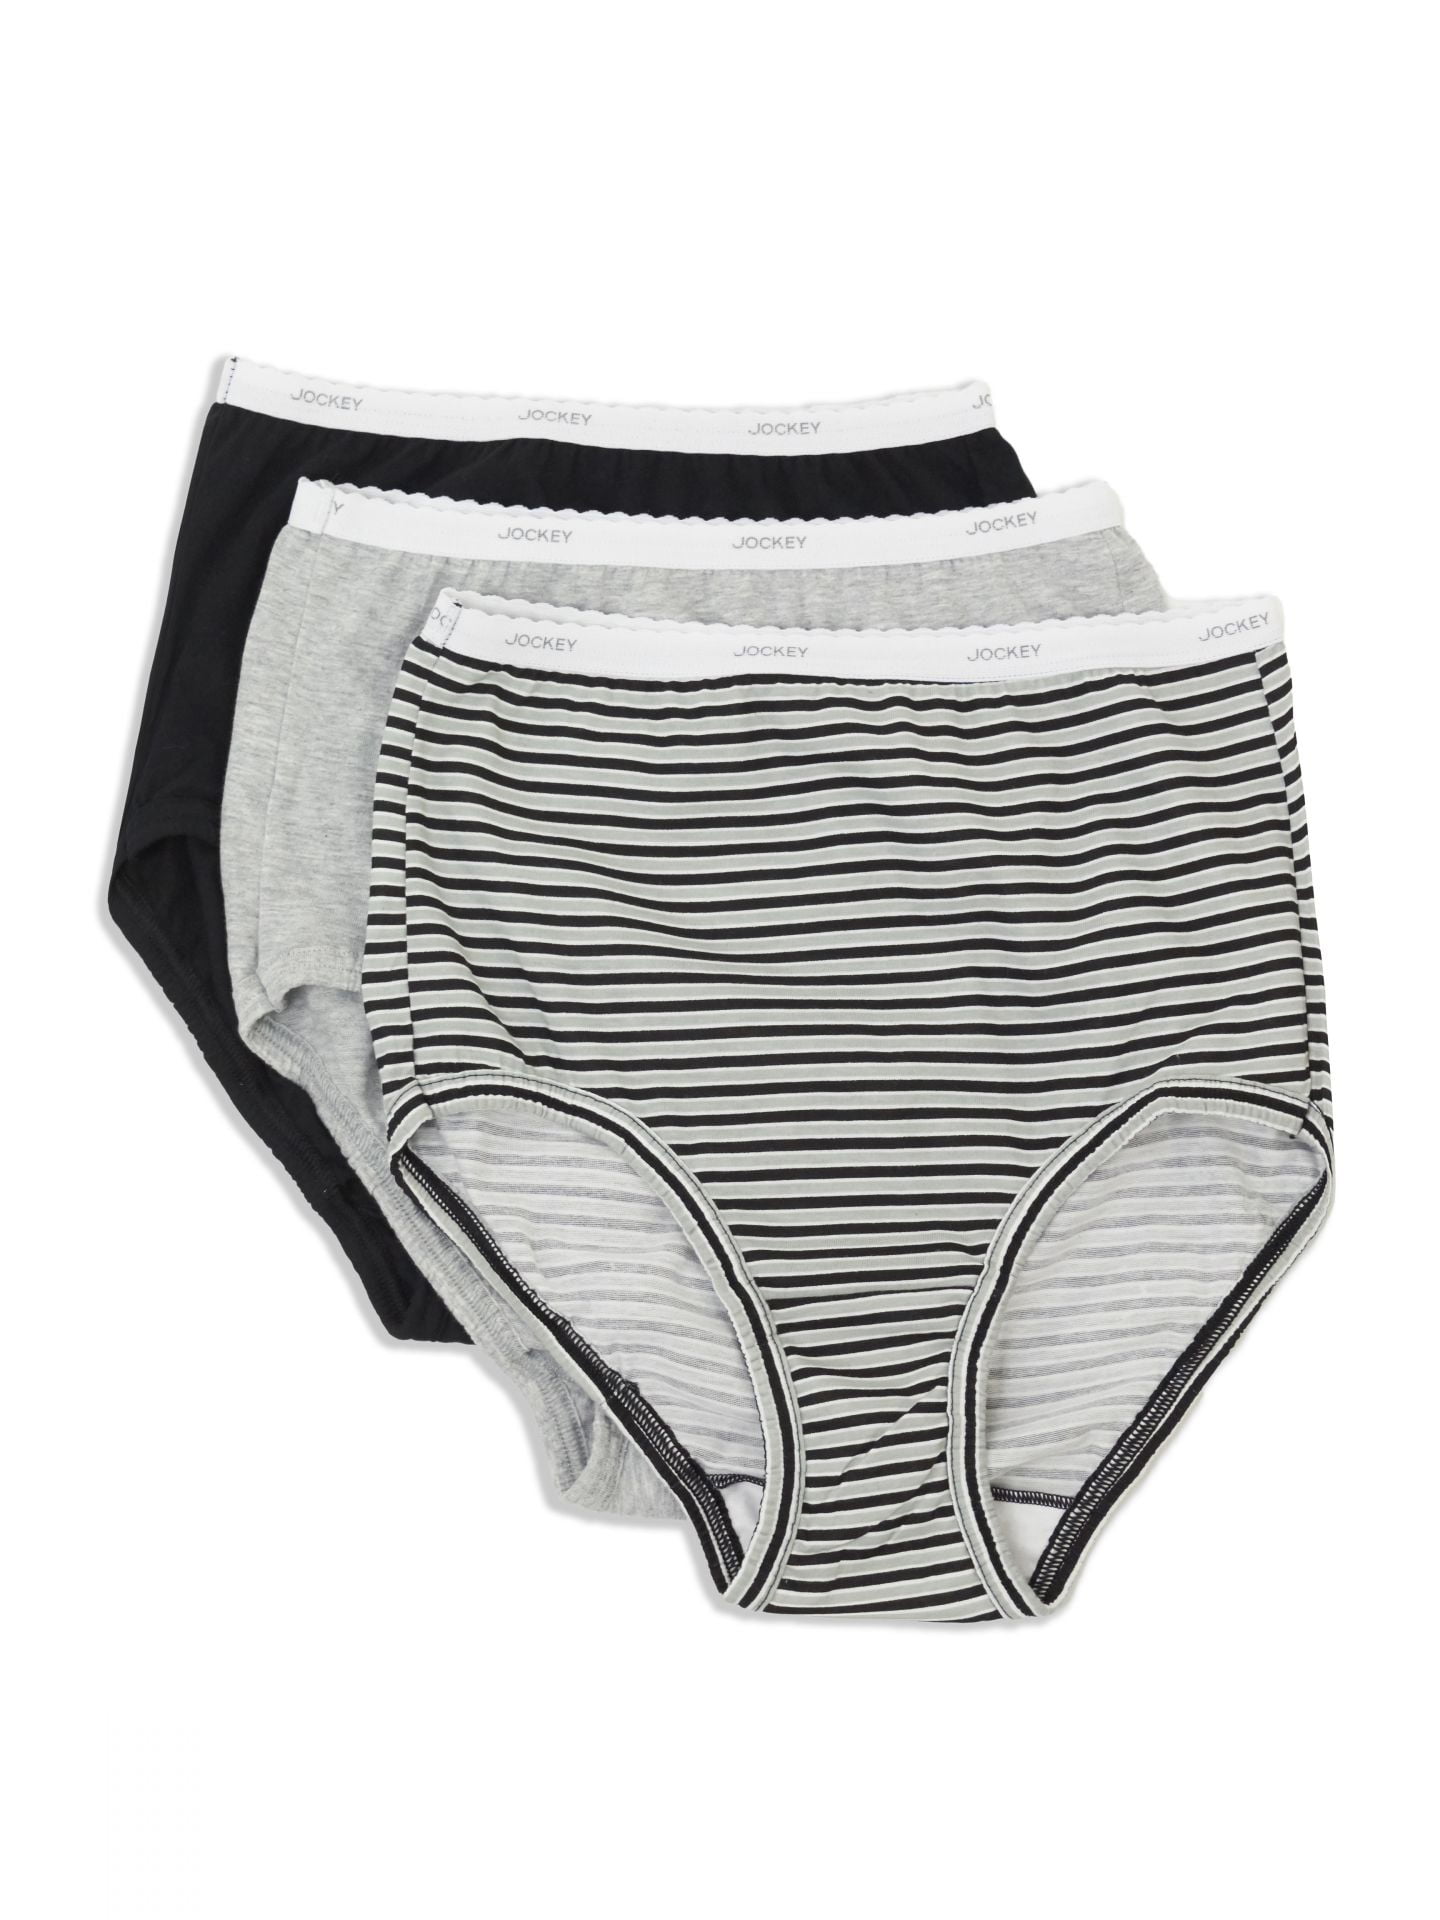 Jockey Women's Underwear Classic Brief - 3 Pack - Walmart.com